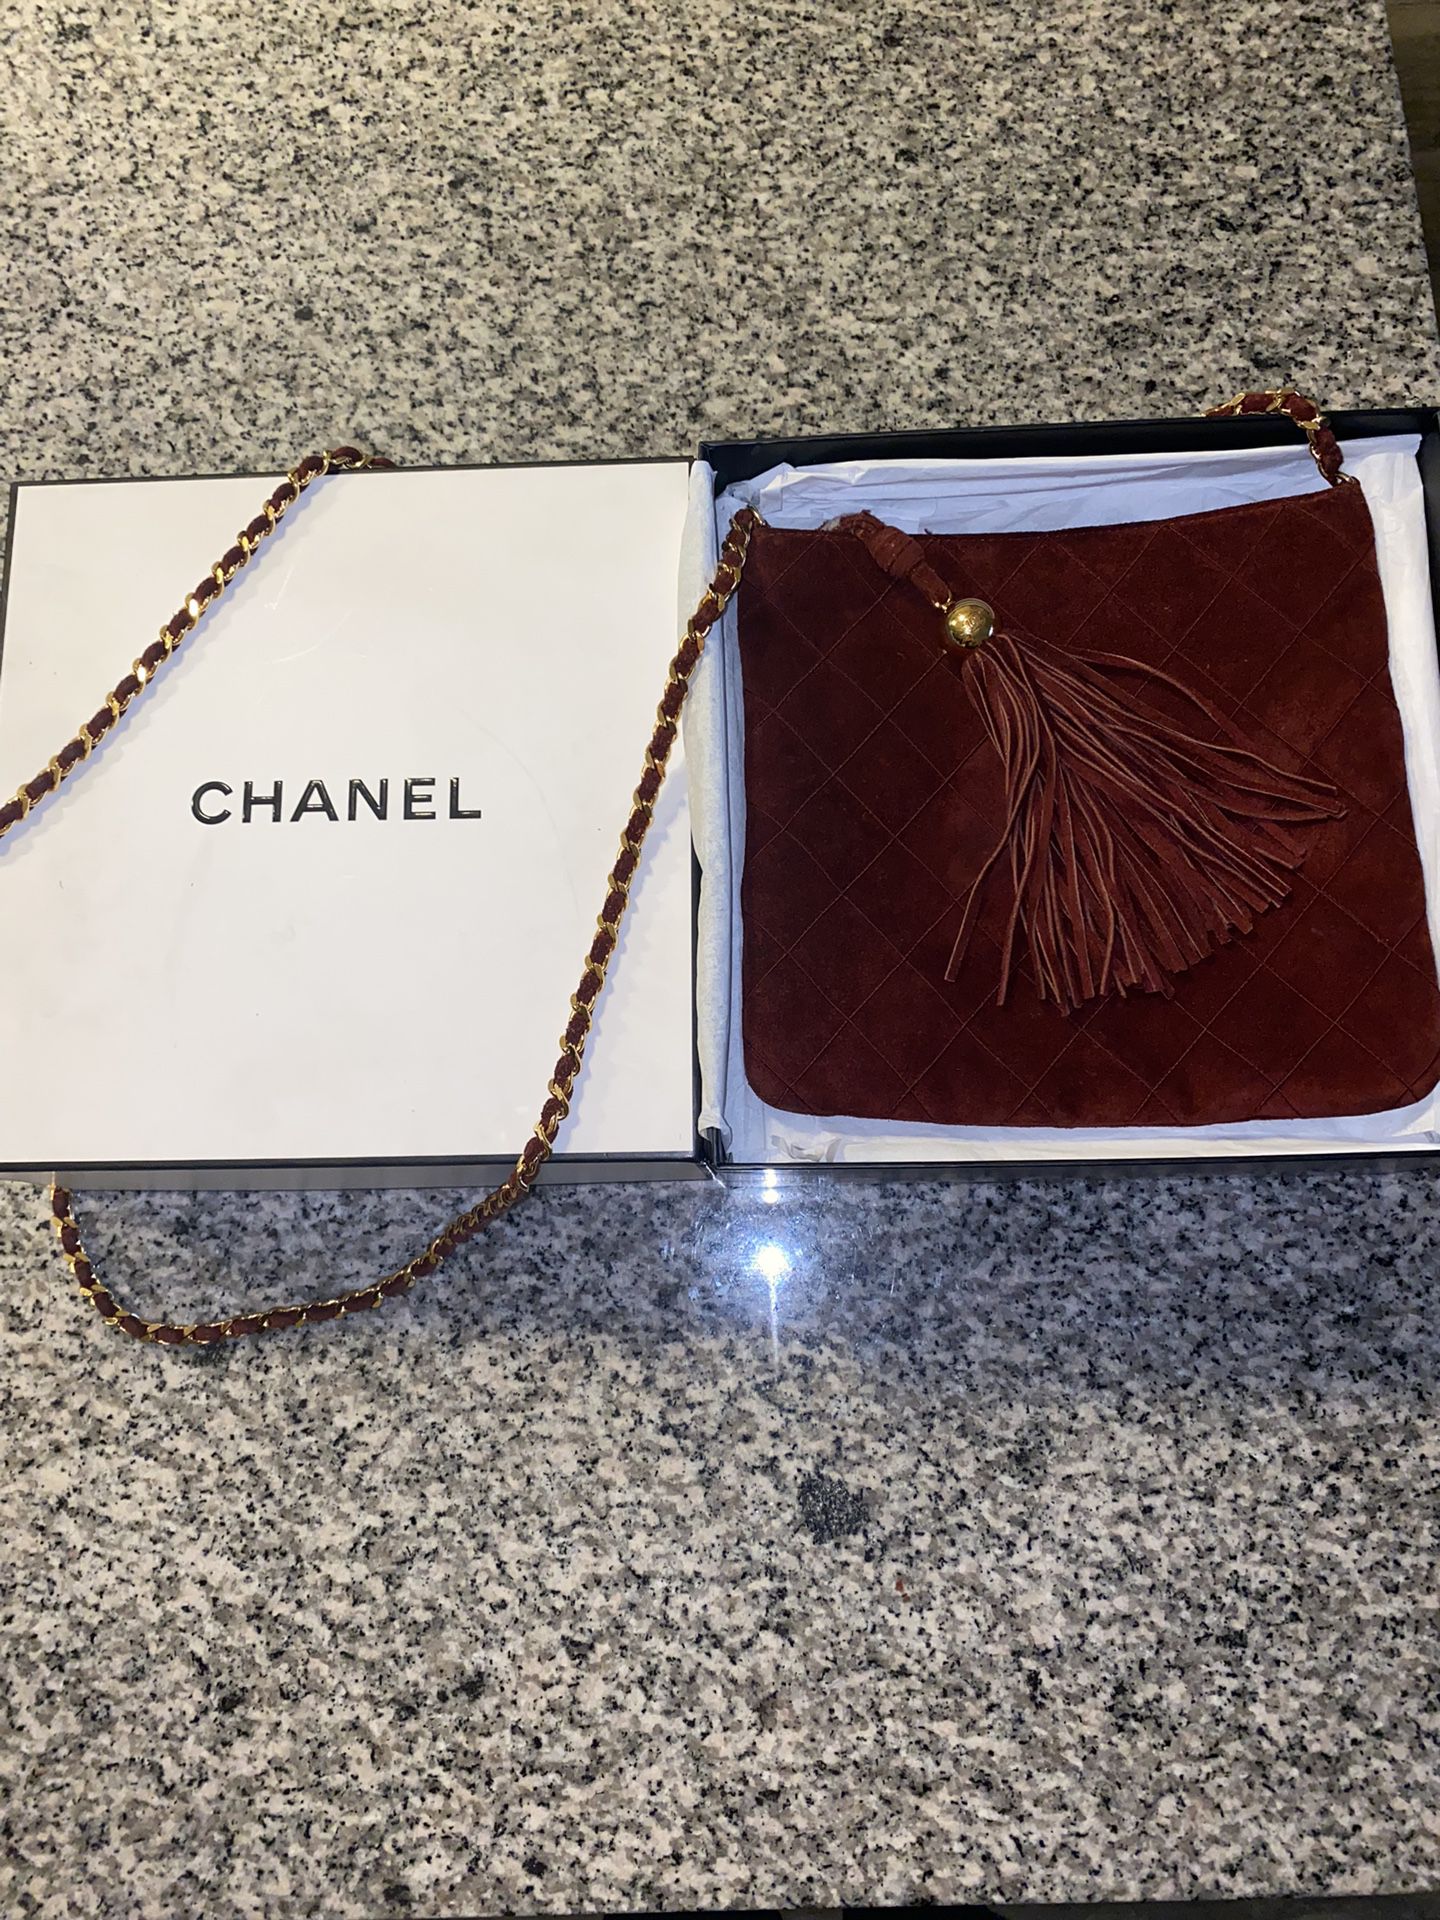 Chanel - Vintage Bag - 24K Gold Alloy Plated for Sale in Scottsdale, AZ -  OfferUp